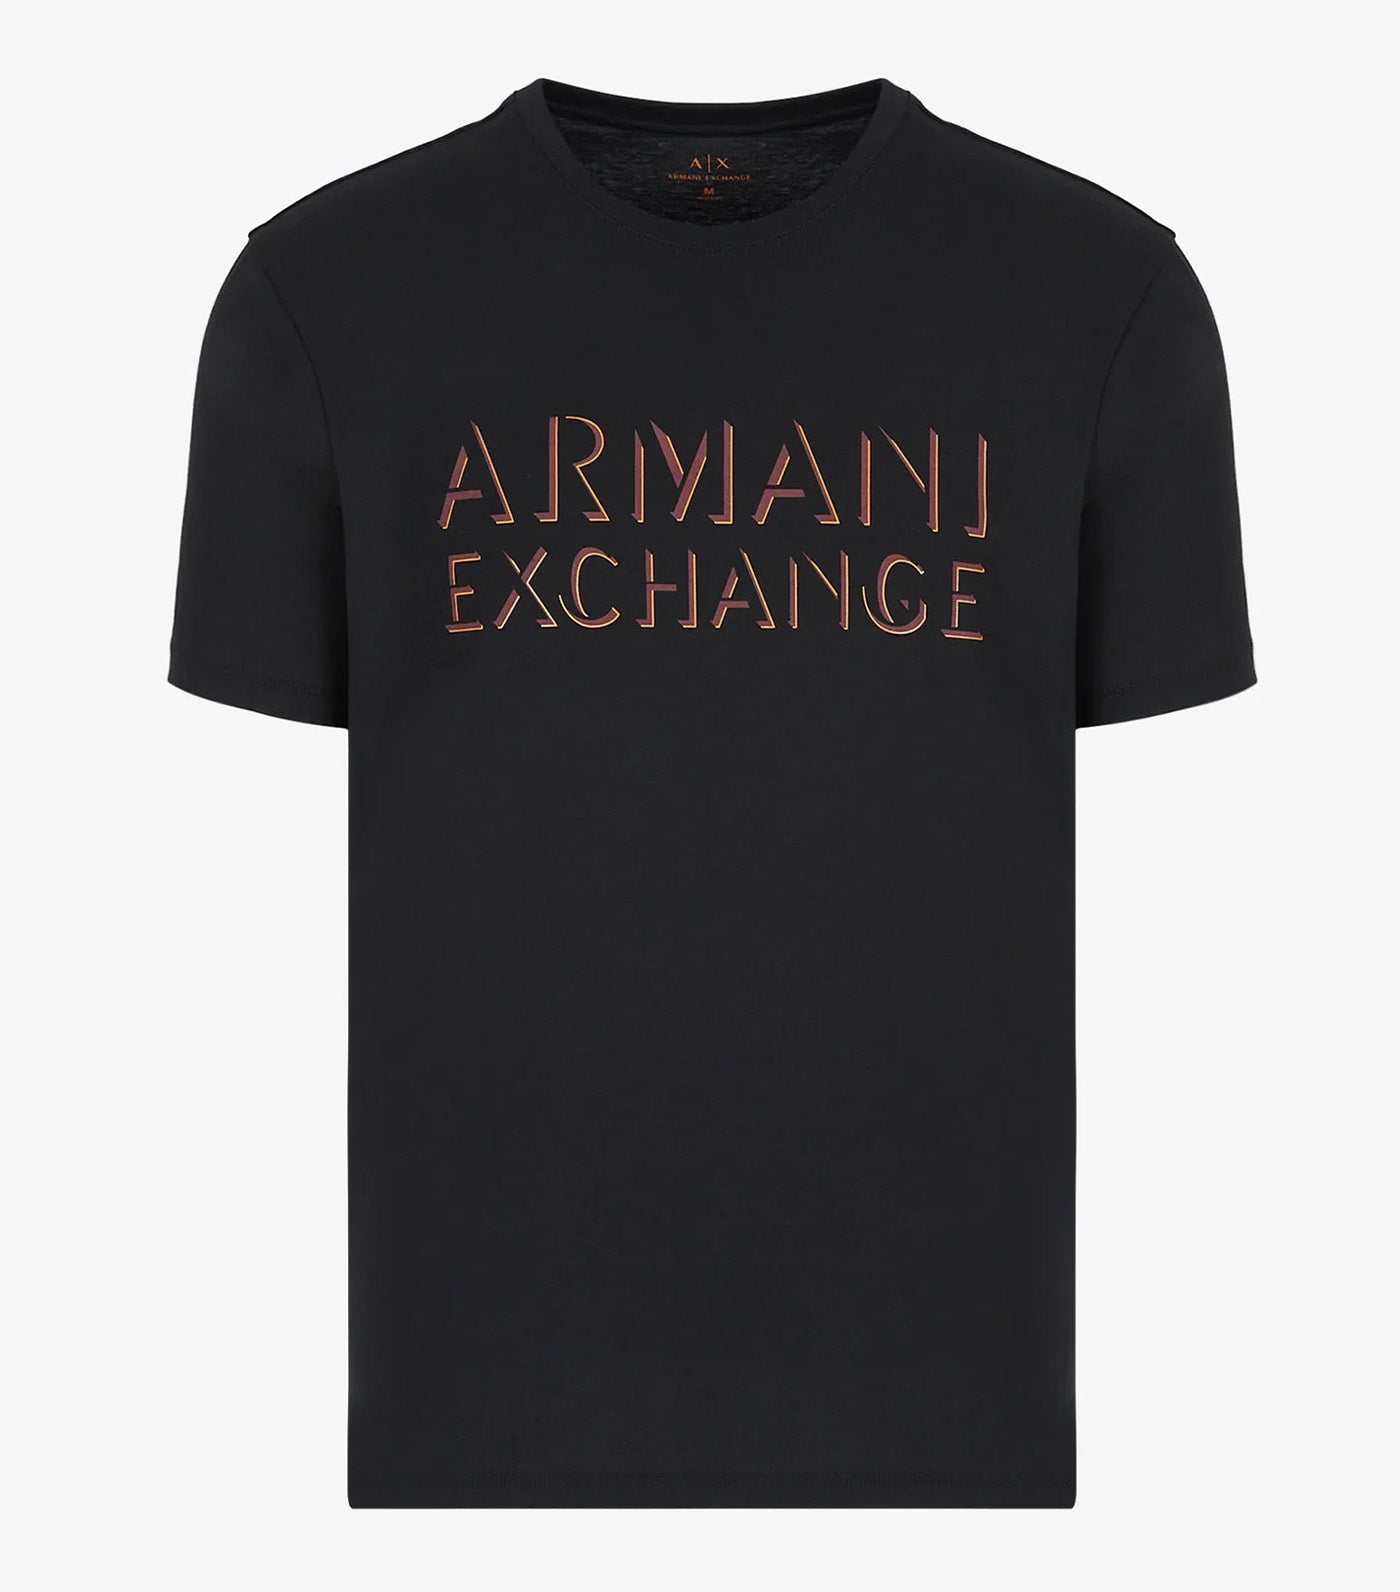 Buy Armani Exchange T-Shirts Online @ ZALORA Malaysia